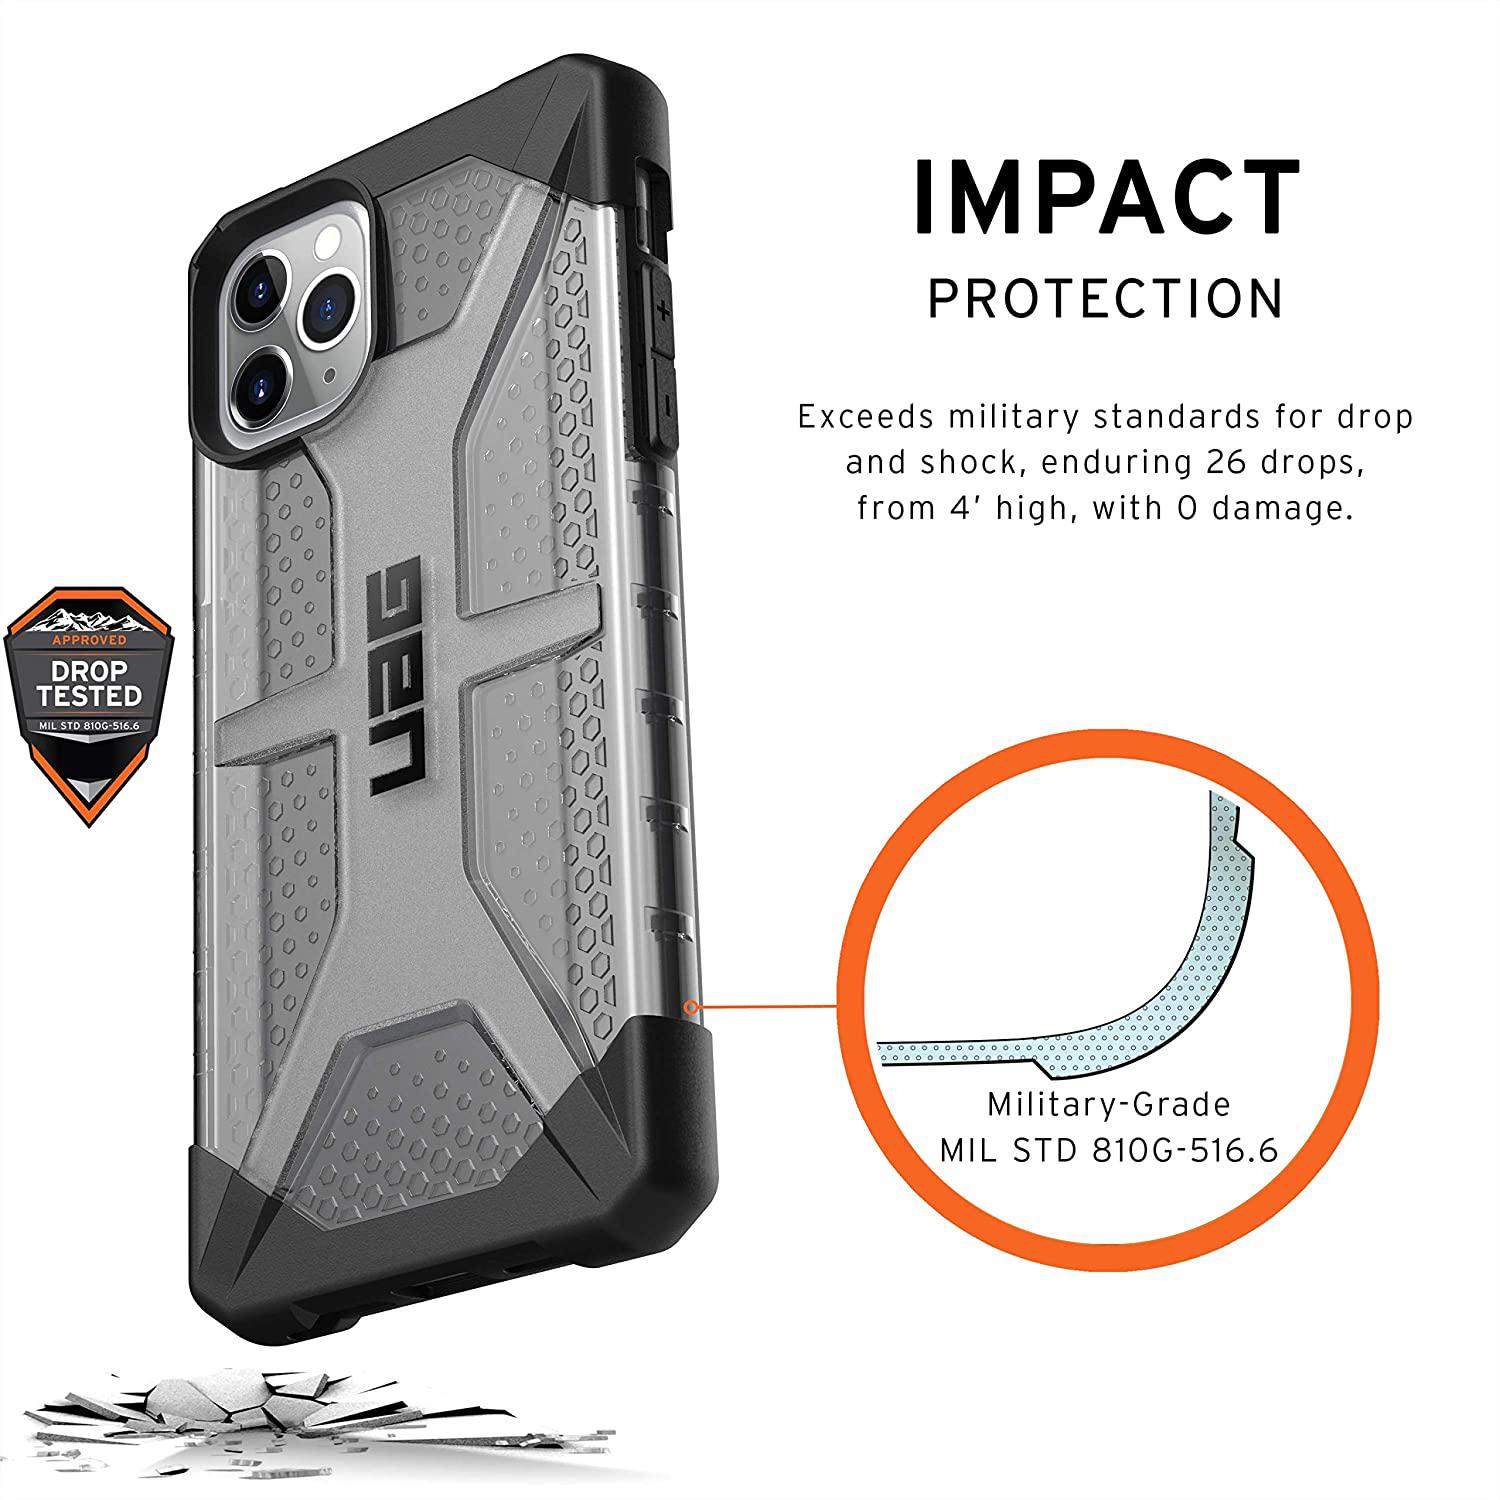 Urban Armor Gear (UAG) Plasma 111723113131 iPhone 11 Pro Max Case – Ash